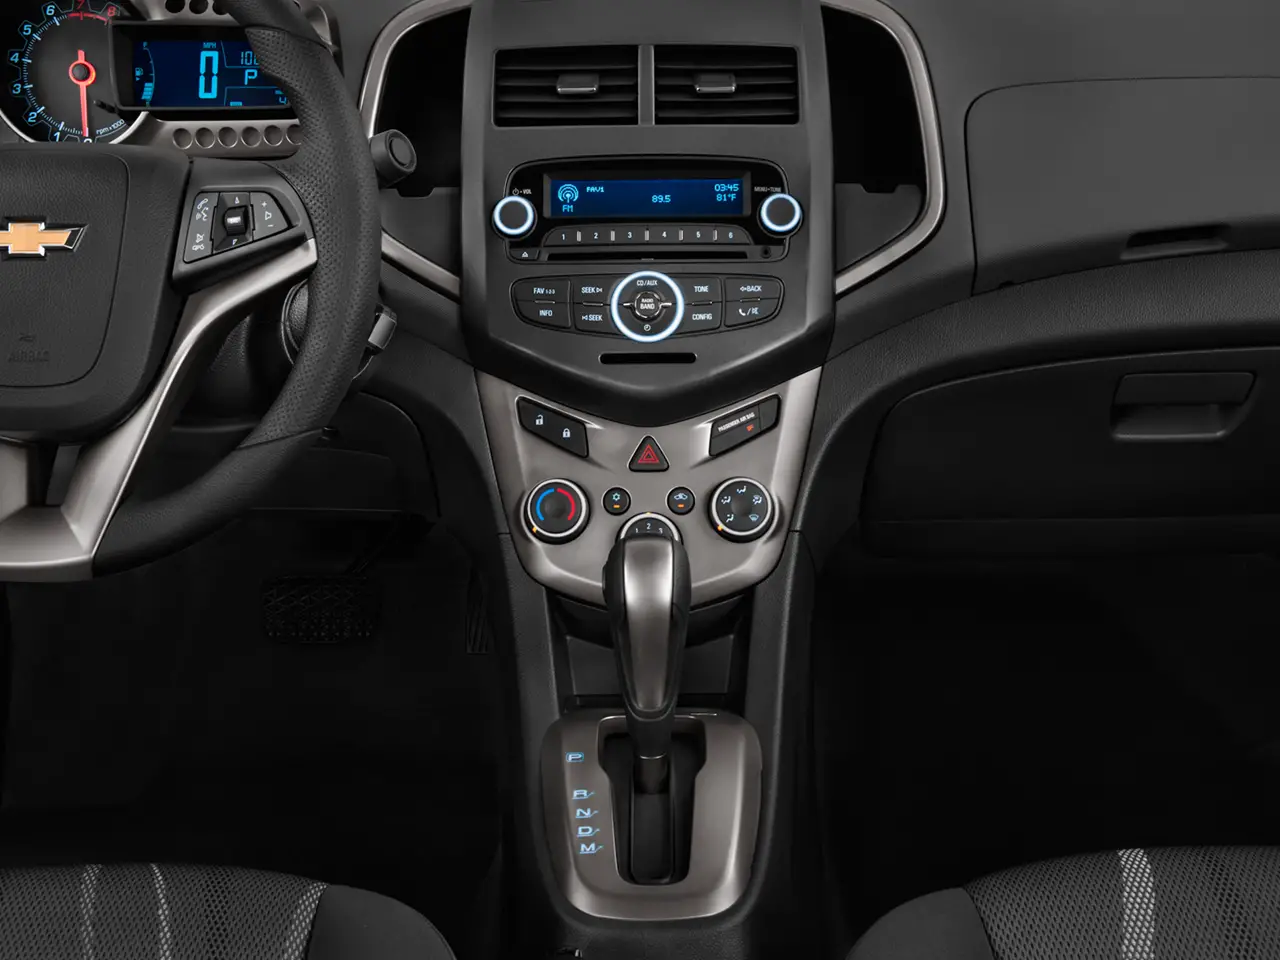 Chevrolet Sonic LT interior 